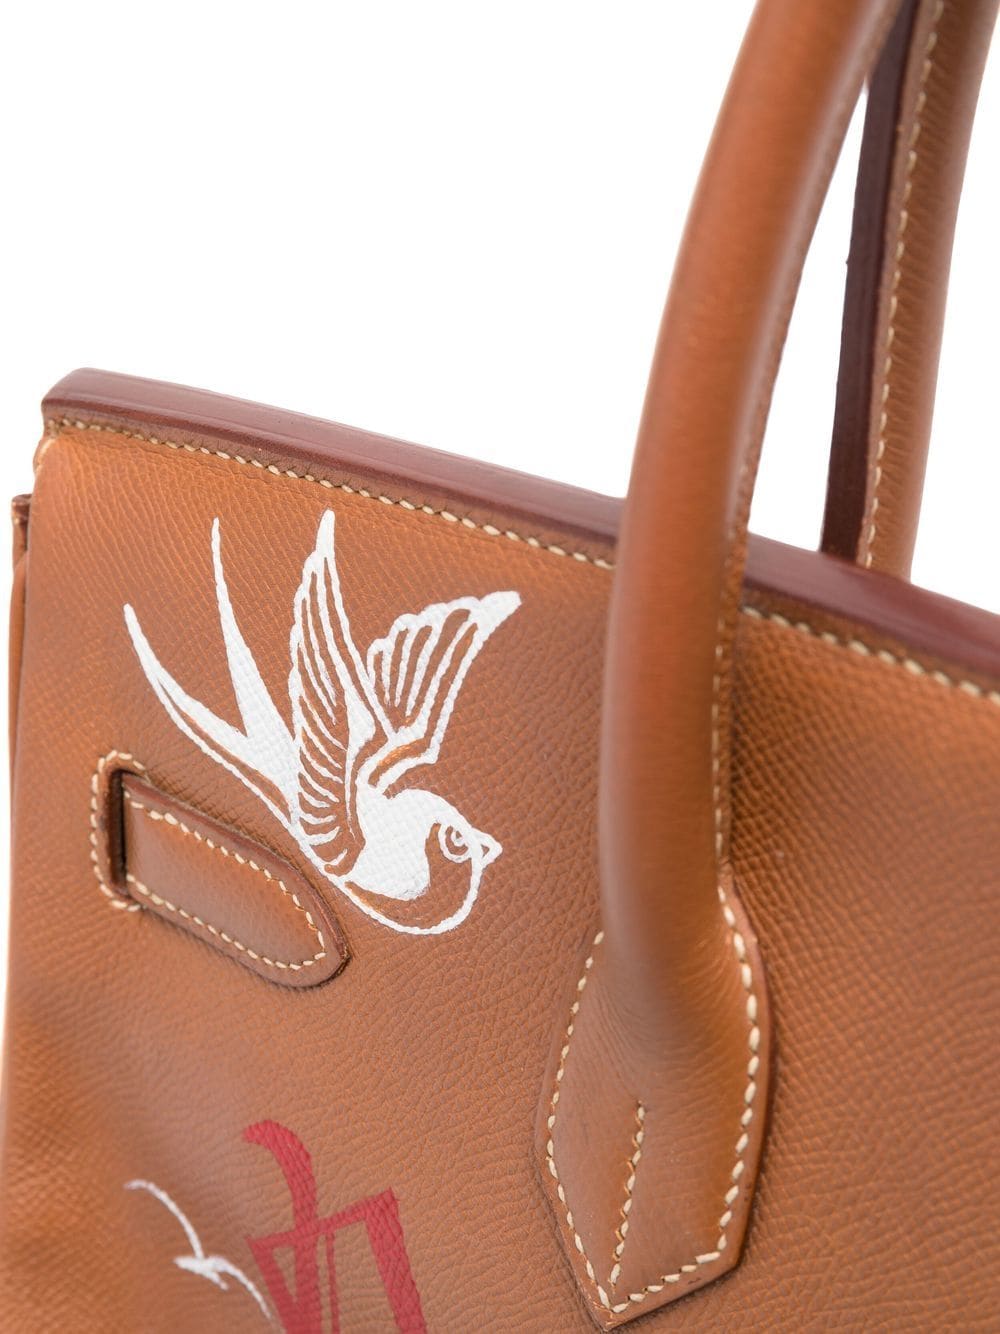 Hermès 'Birkin' Bag 40cm - Farfetch